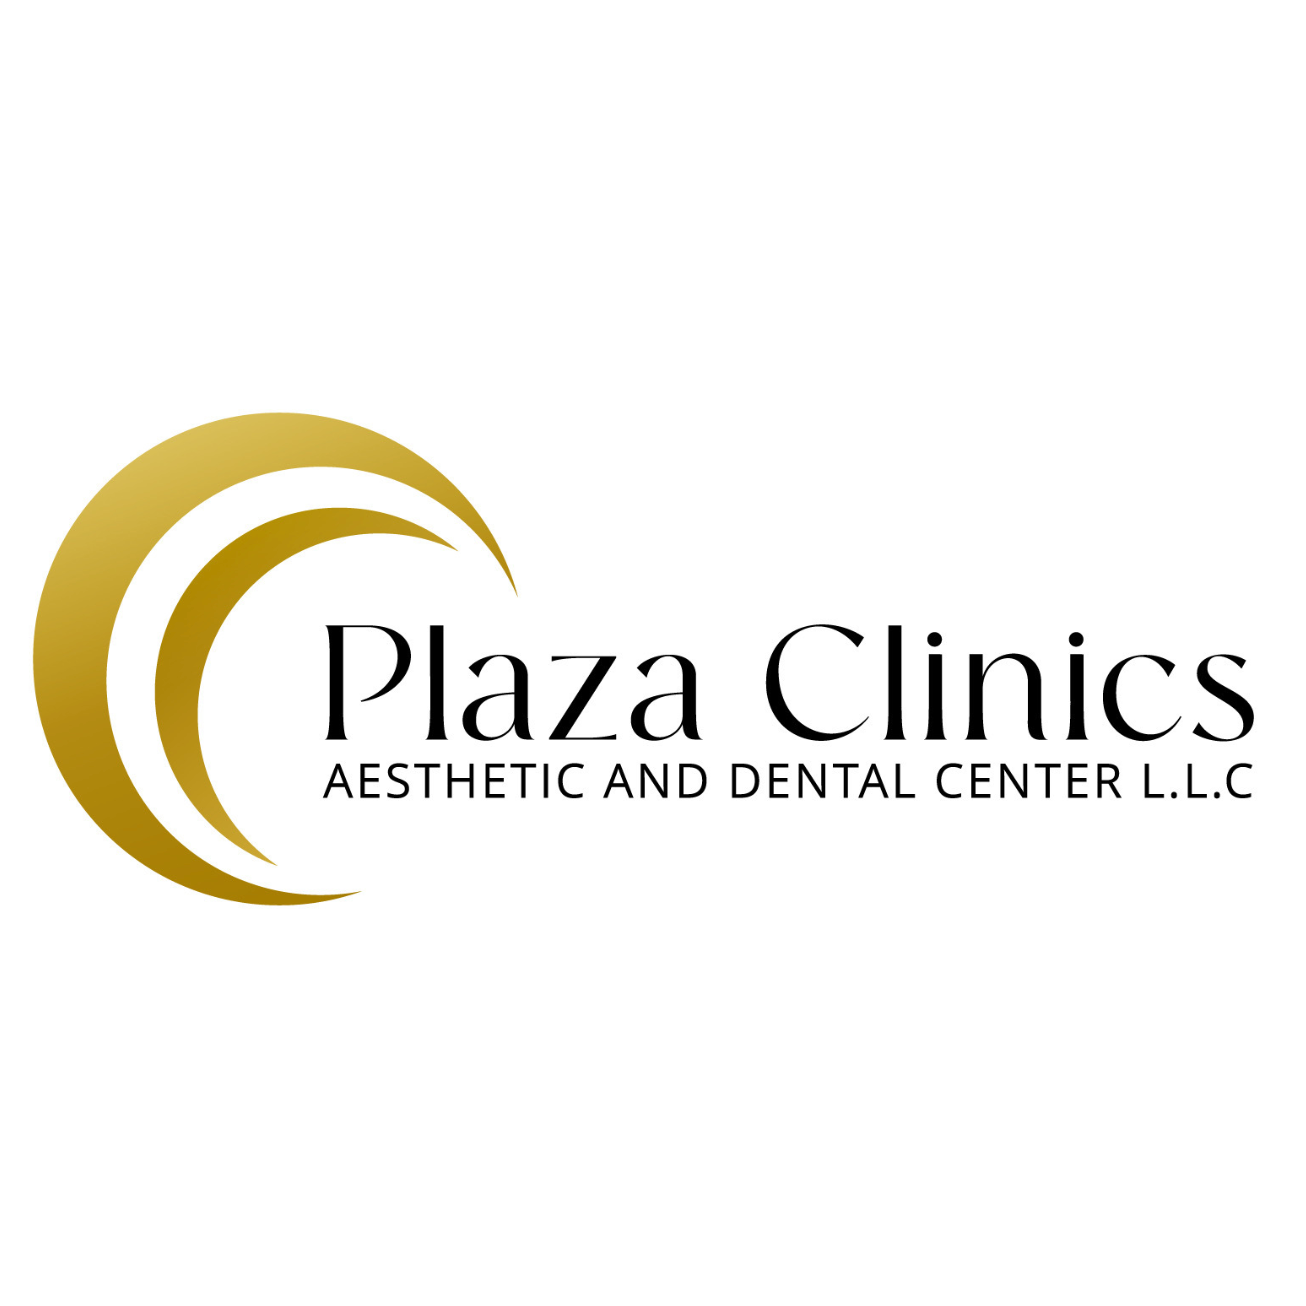 Plaza Clinics - Aesthetic and Dental Center